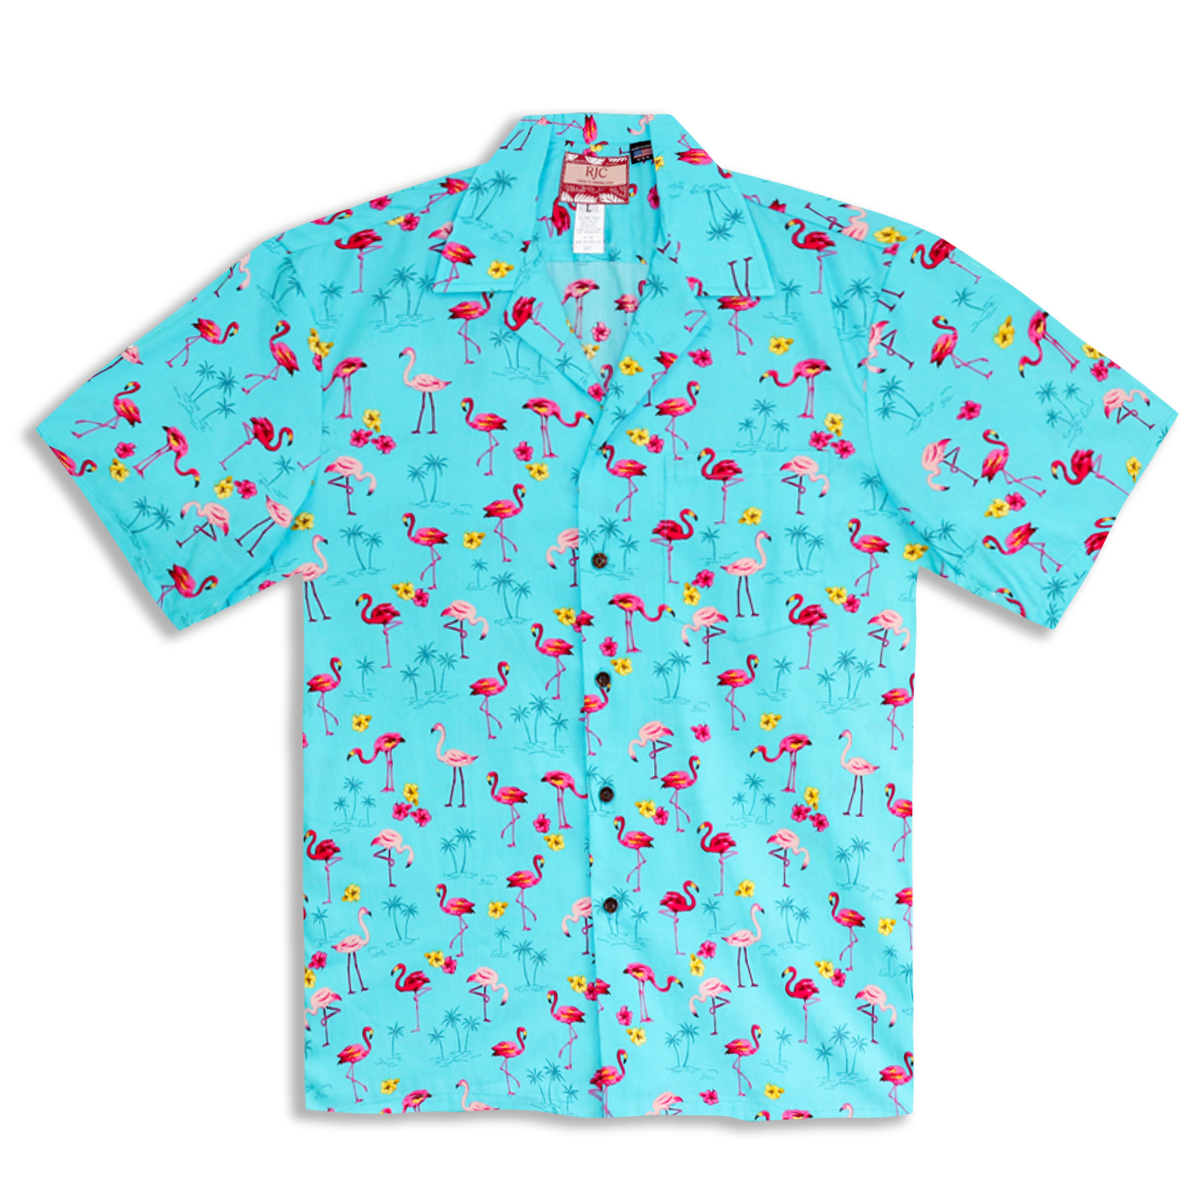 Flamingo Hawaii Shirt hawaii shirt men,vintage hawaii shirt Flamingo Aloha Shirt Flamingo Hawaiian shirt Gift for Boyfriend